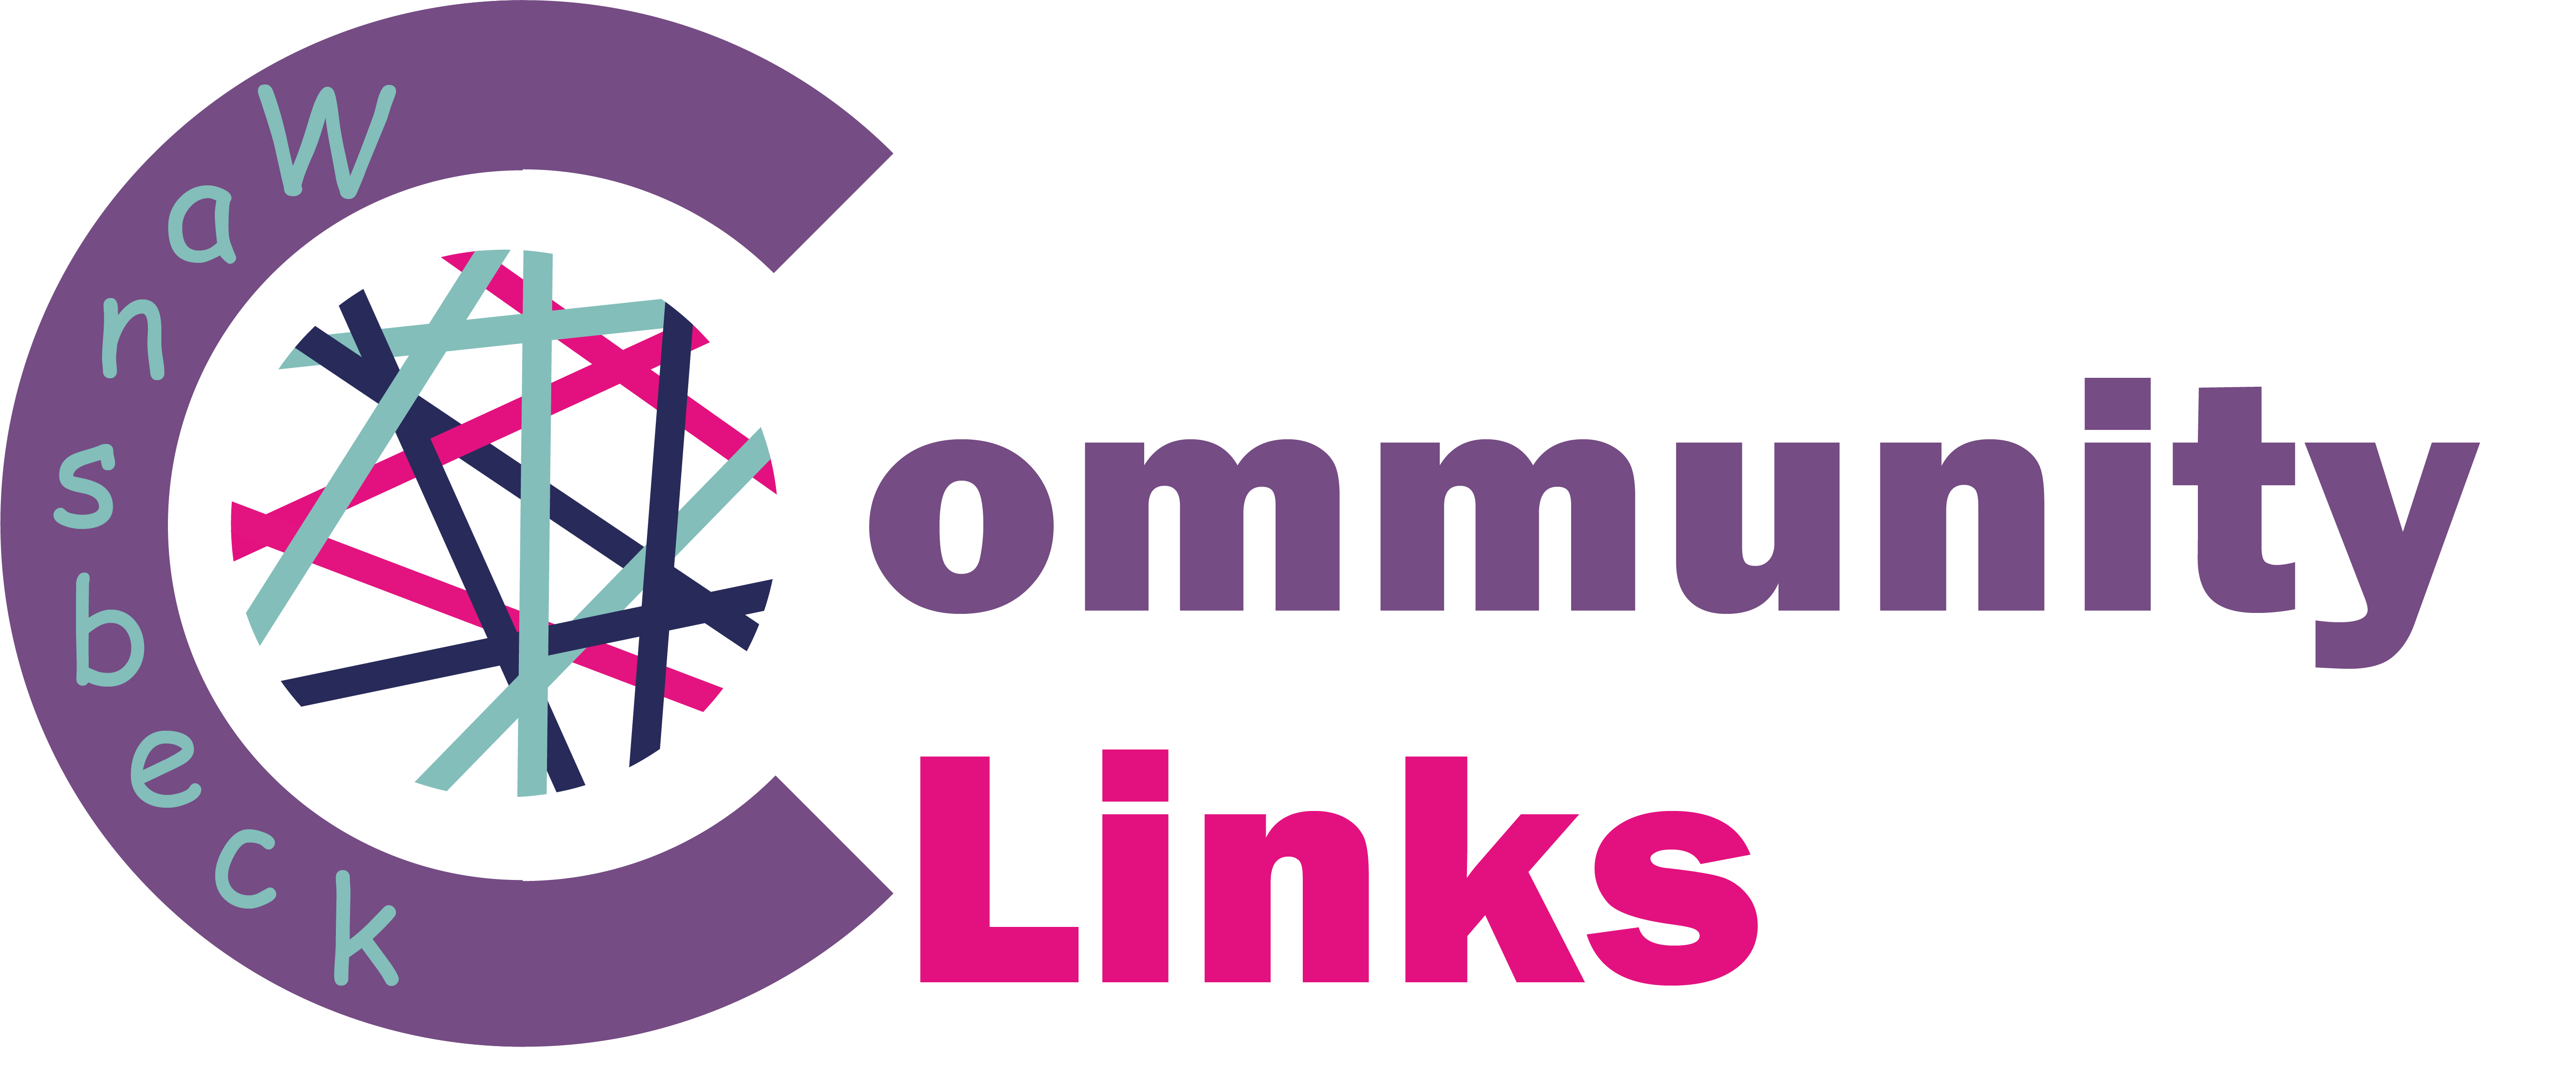 Wansbeck Community Link Workers - Social Prescribing